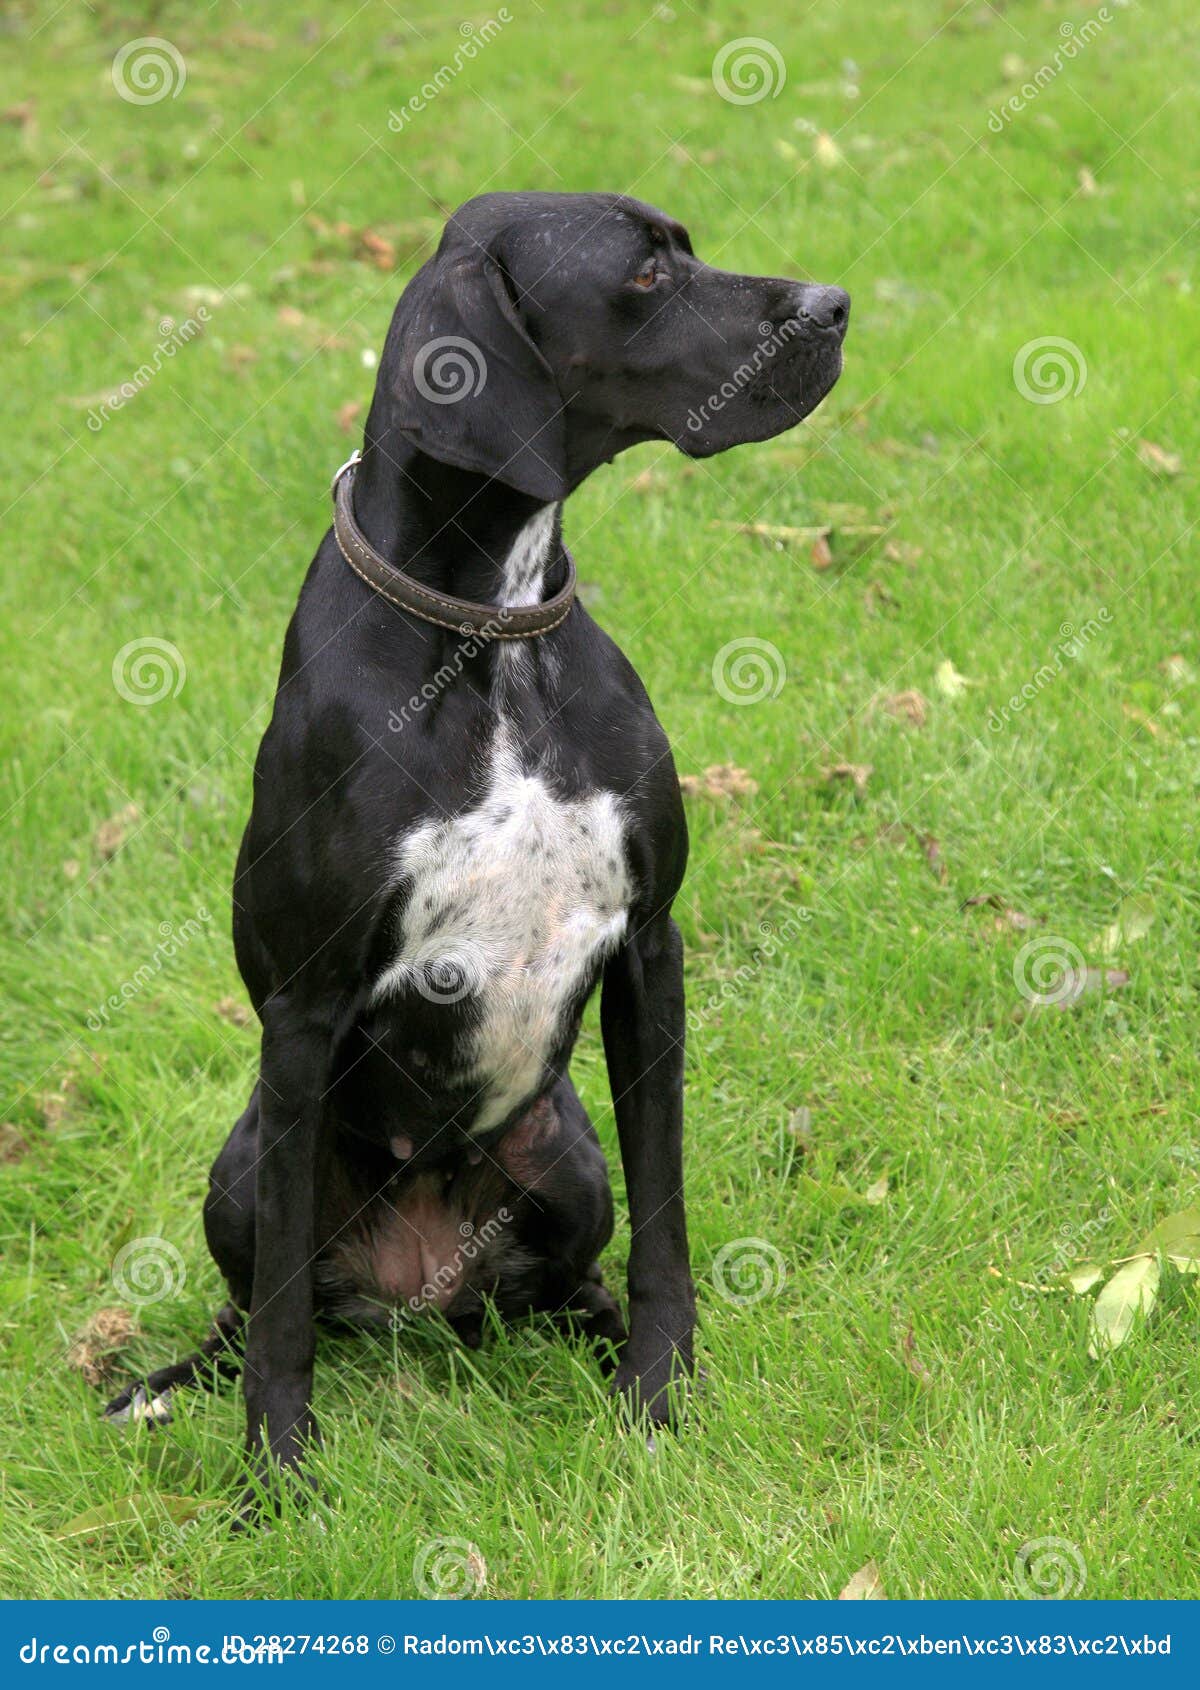 black english pointer dog